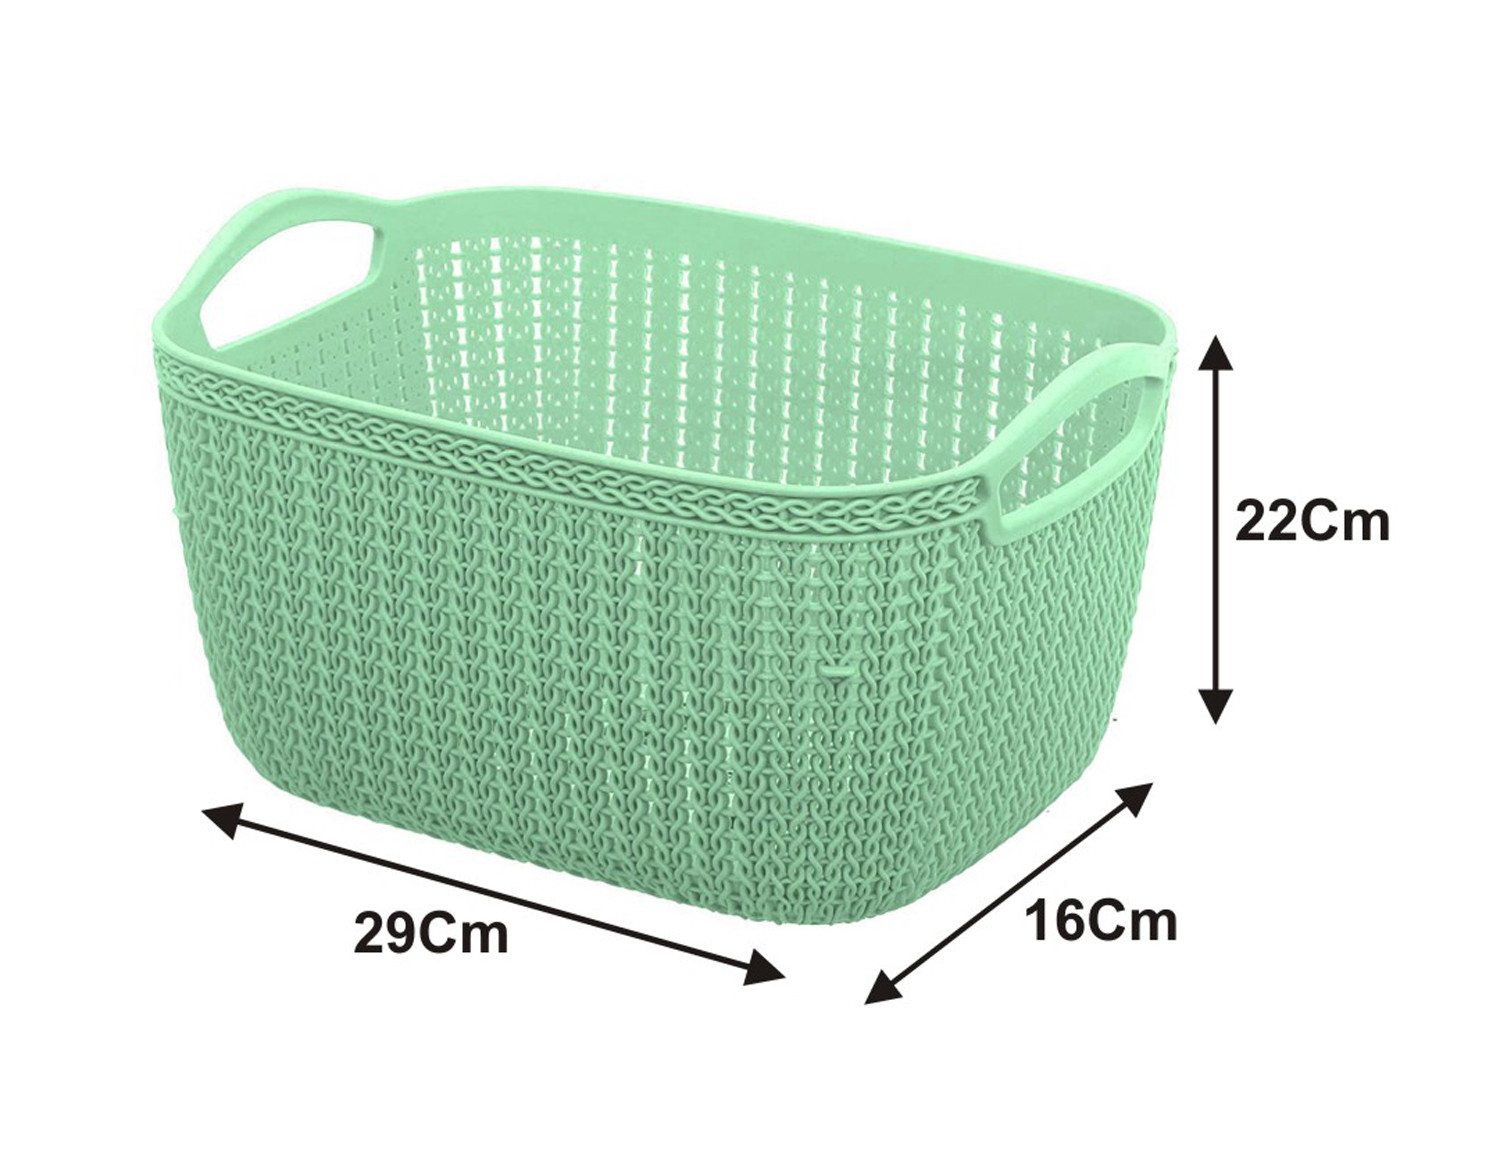 Kuber Industries Q-5,6 Unbreakable Plastic Multipurpose Large & Medium Size Flexible Storage Baskets/Fruit Vegetable Bathroom Stationary Home Basket with Handles (Light Green)